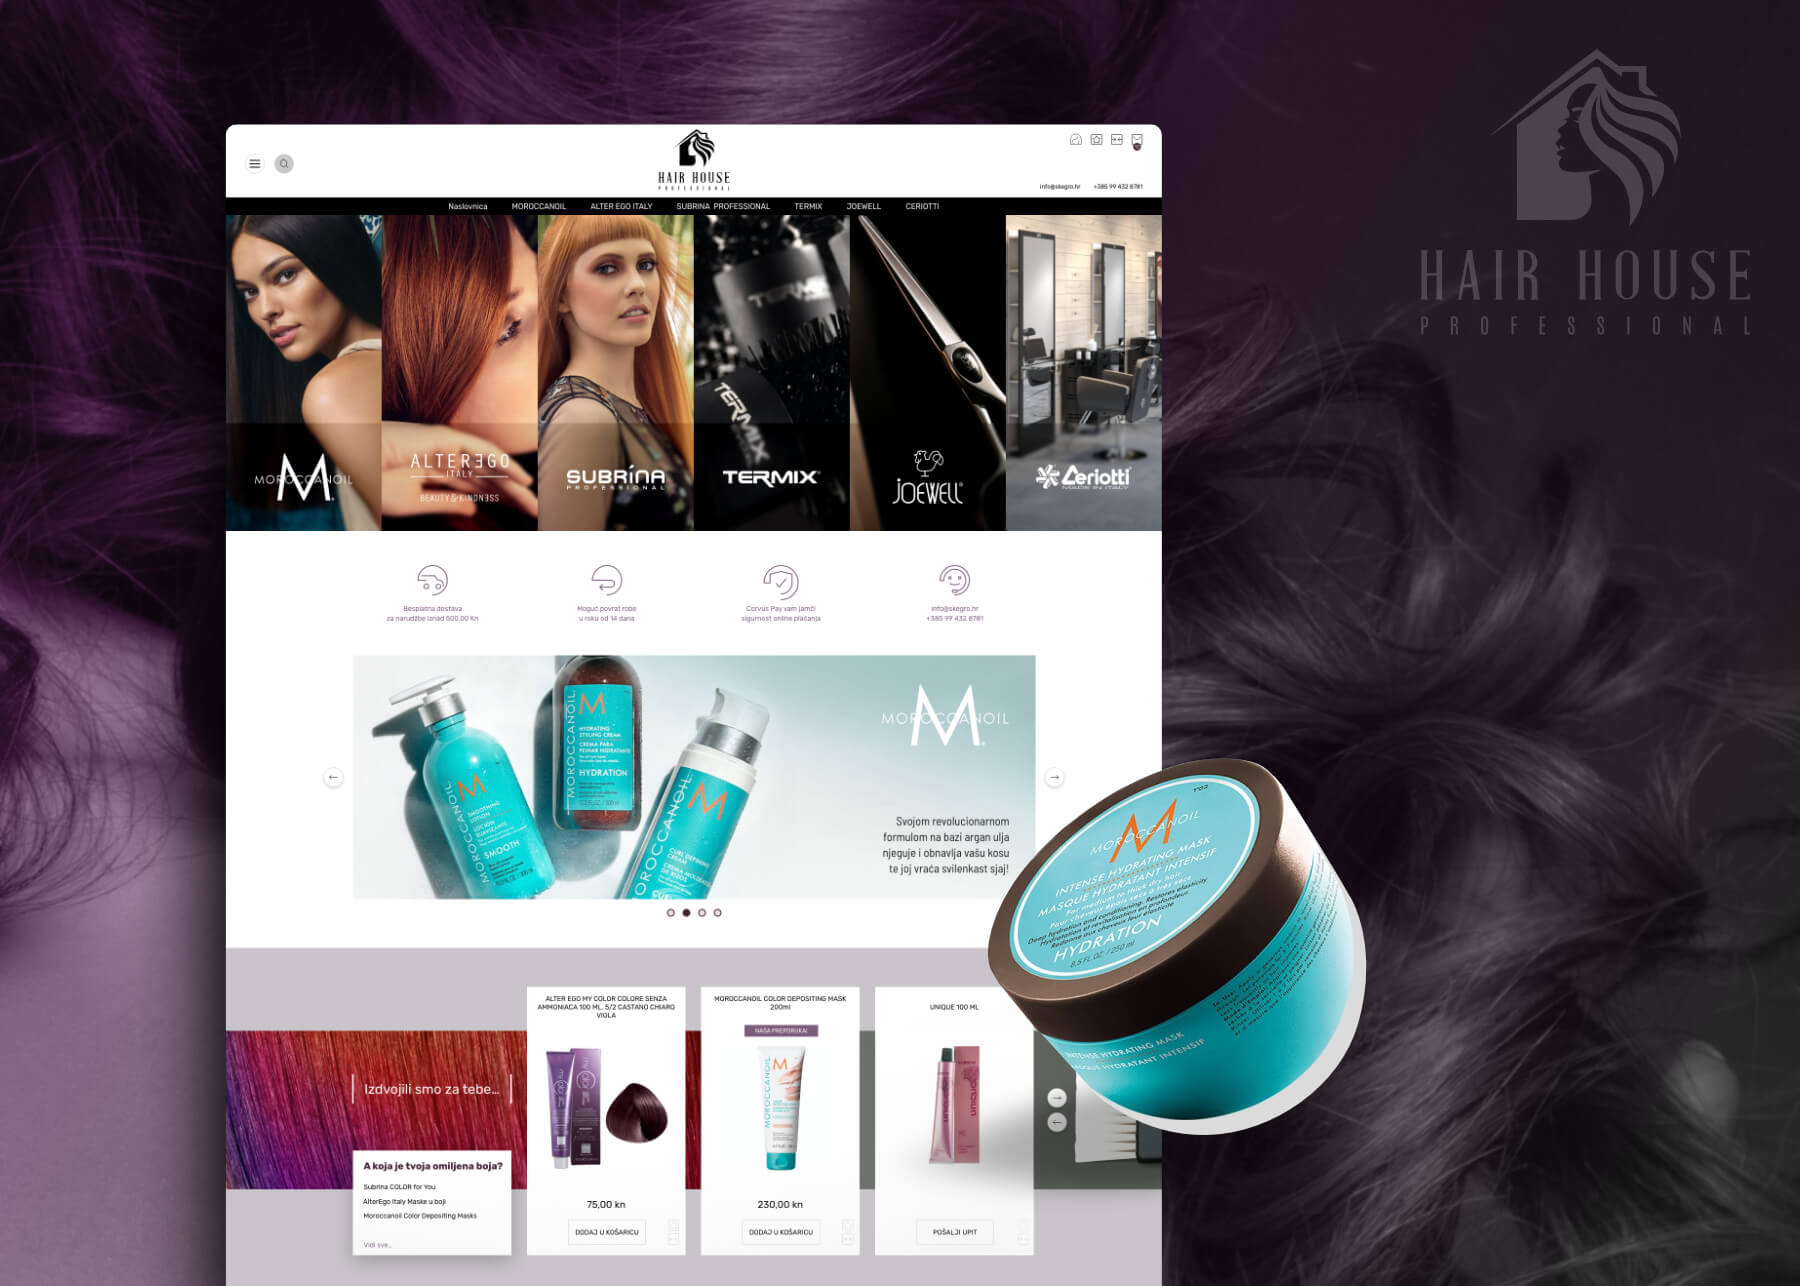 Hair House Professional webshop